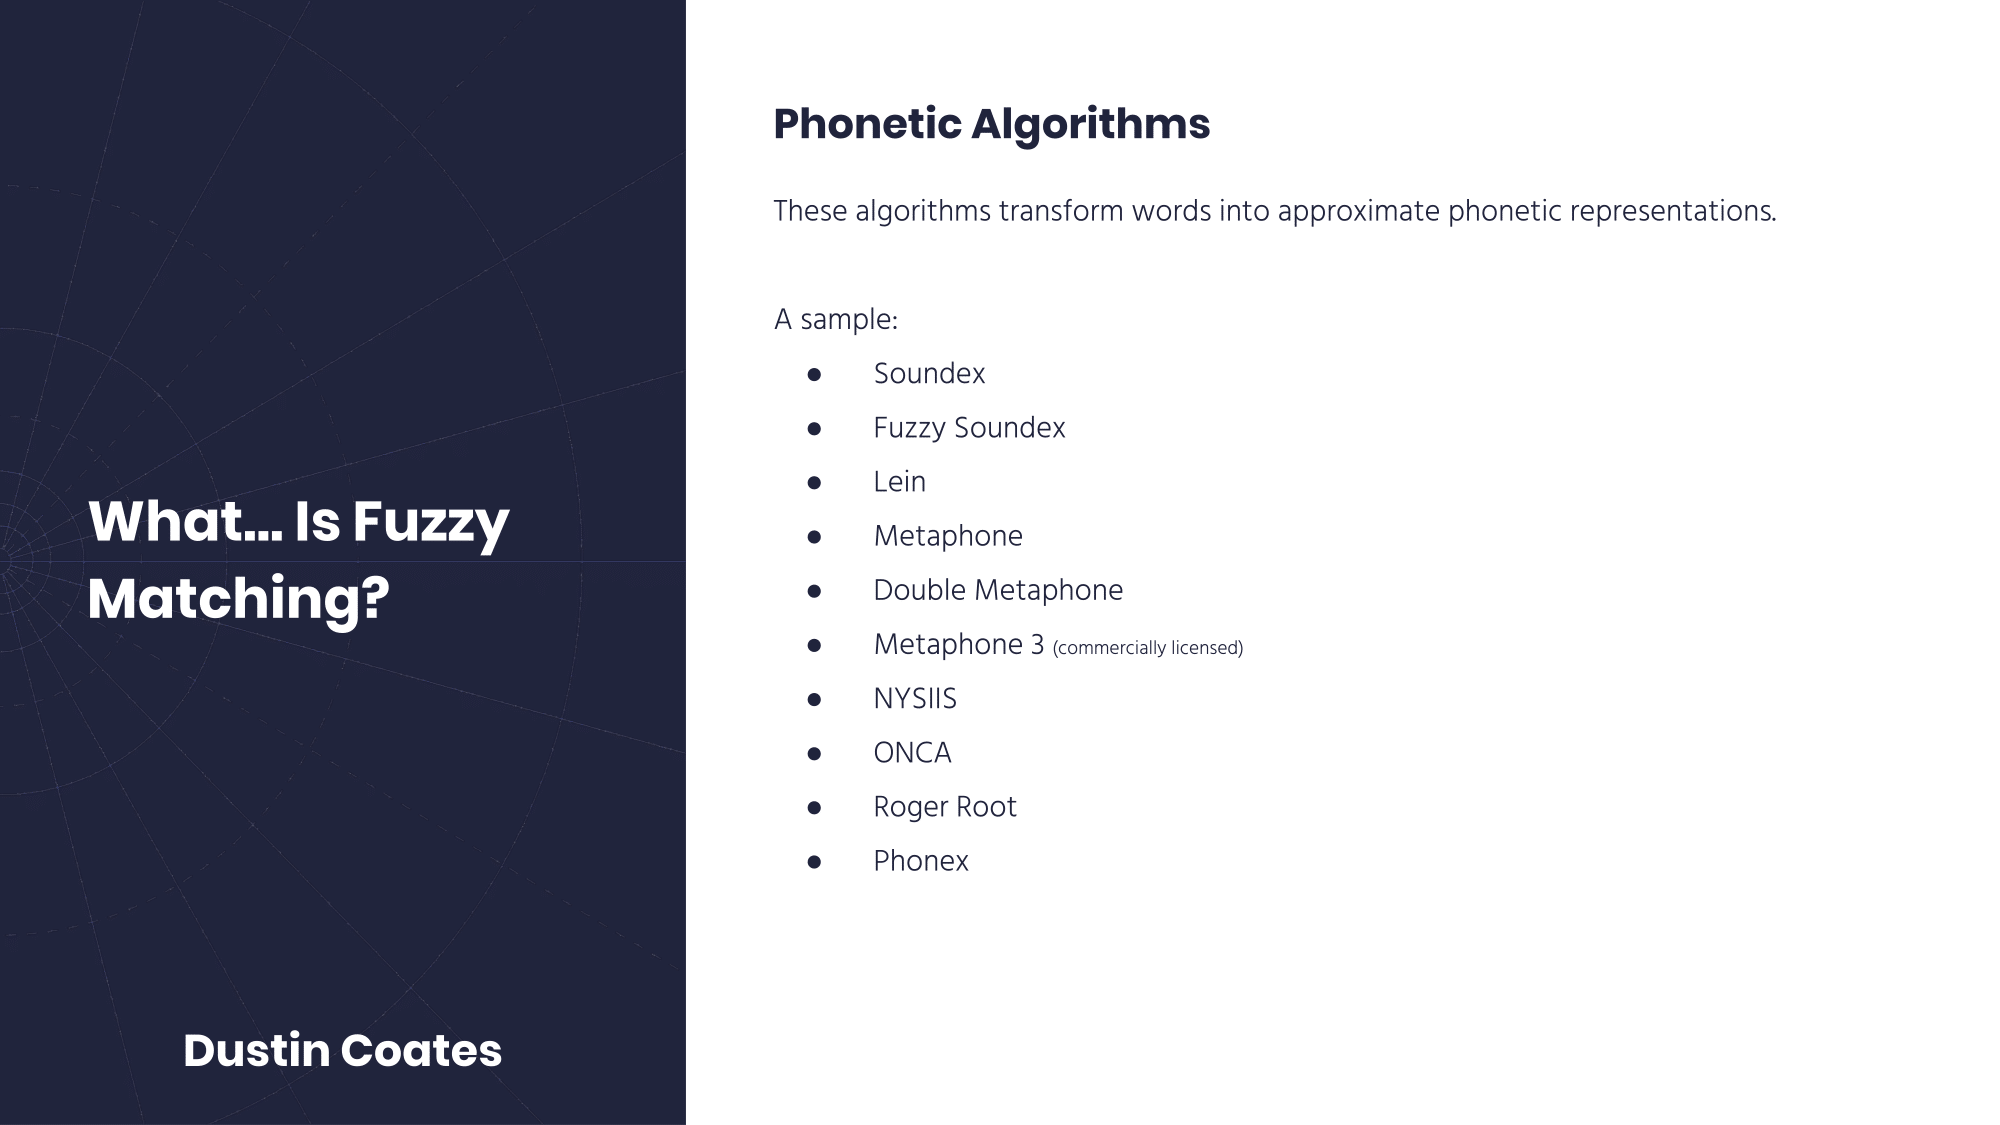 Phonetic algorithms